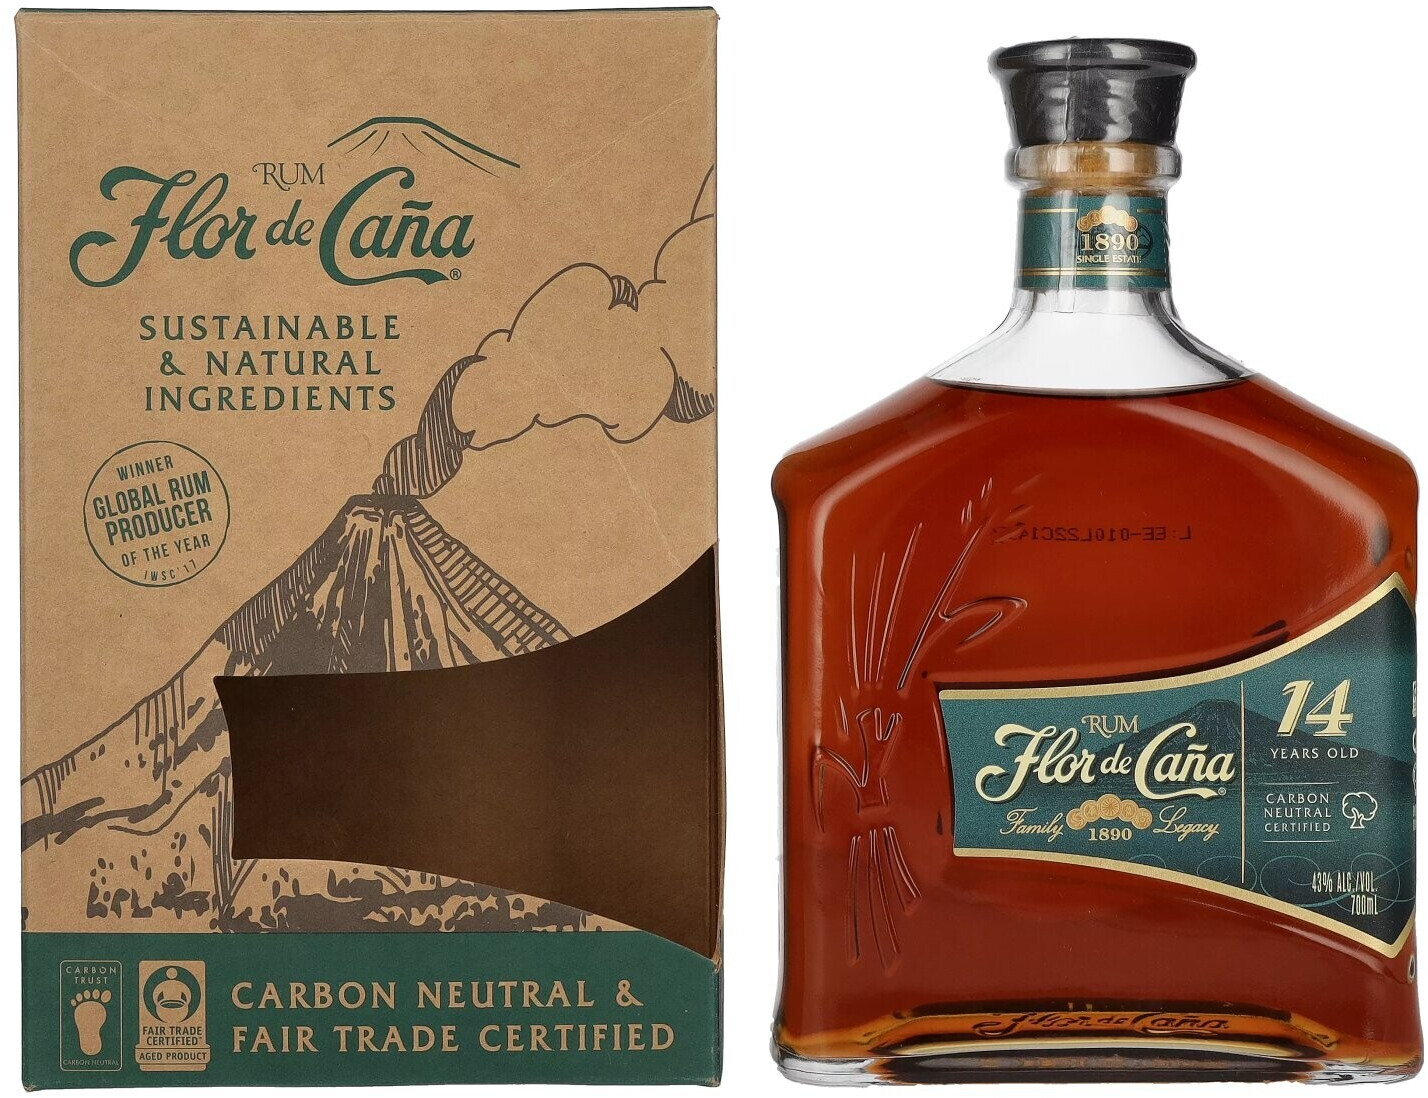 Flor de Caña 0,7l Preisvergleich Old Years € 14 Rum ab 43% bei | 35,90